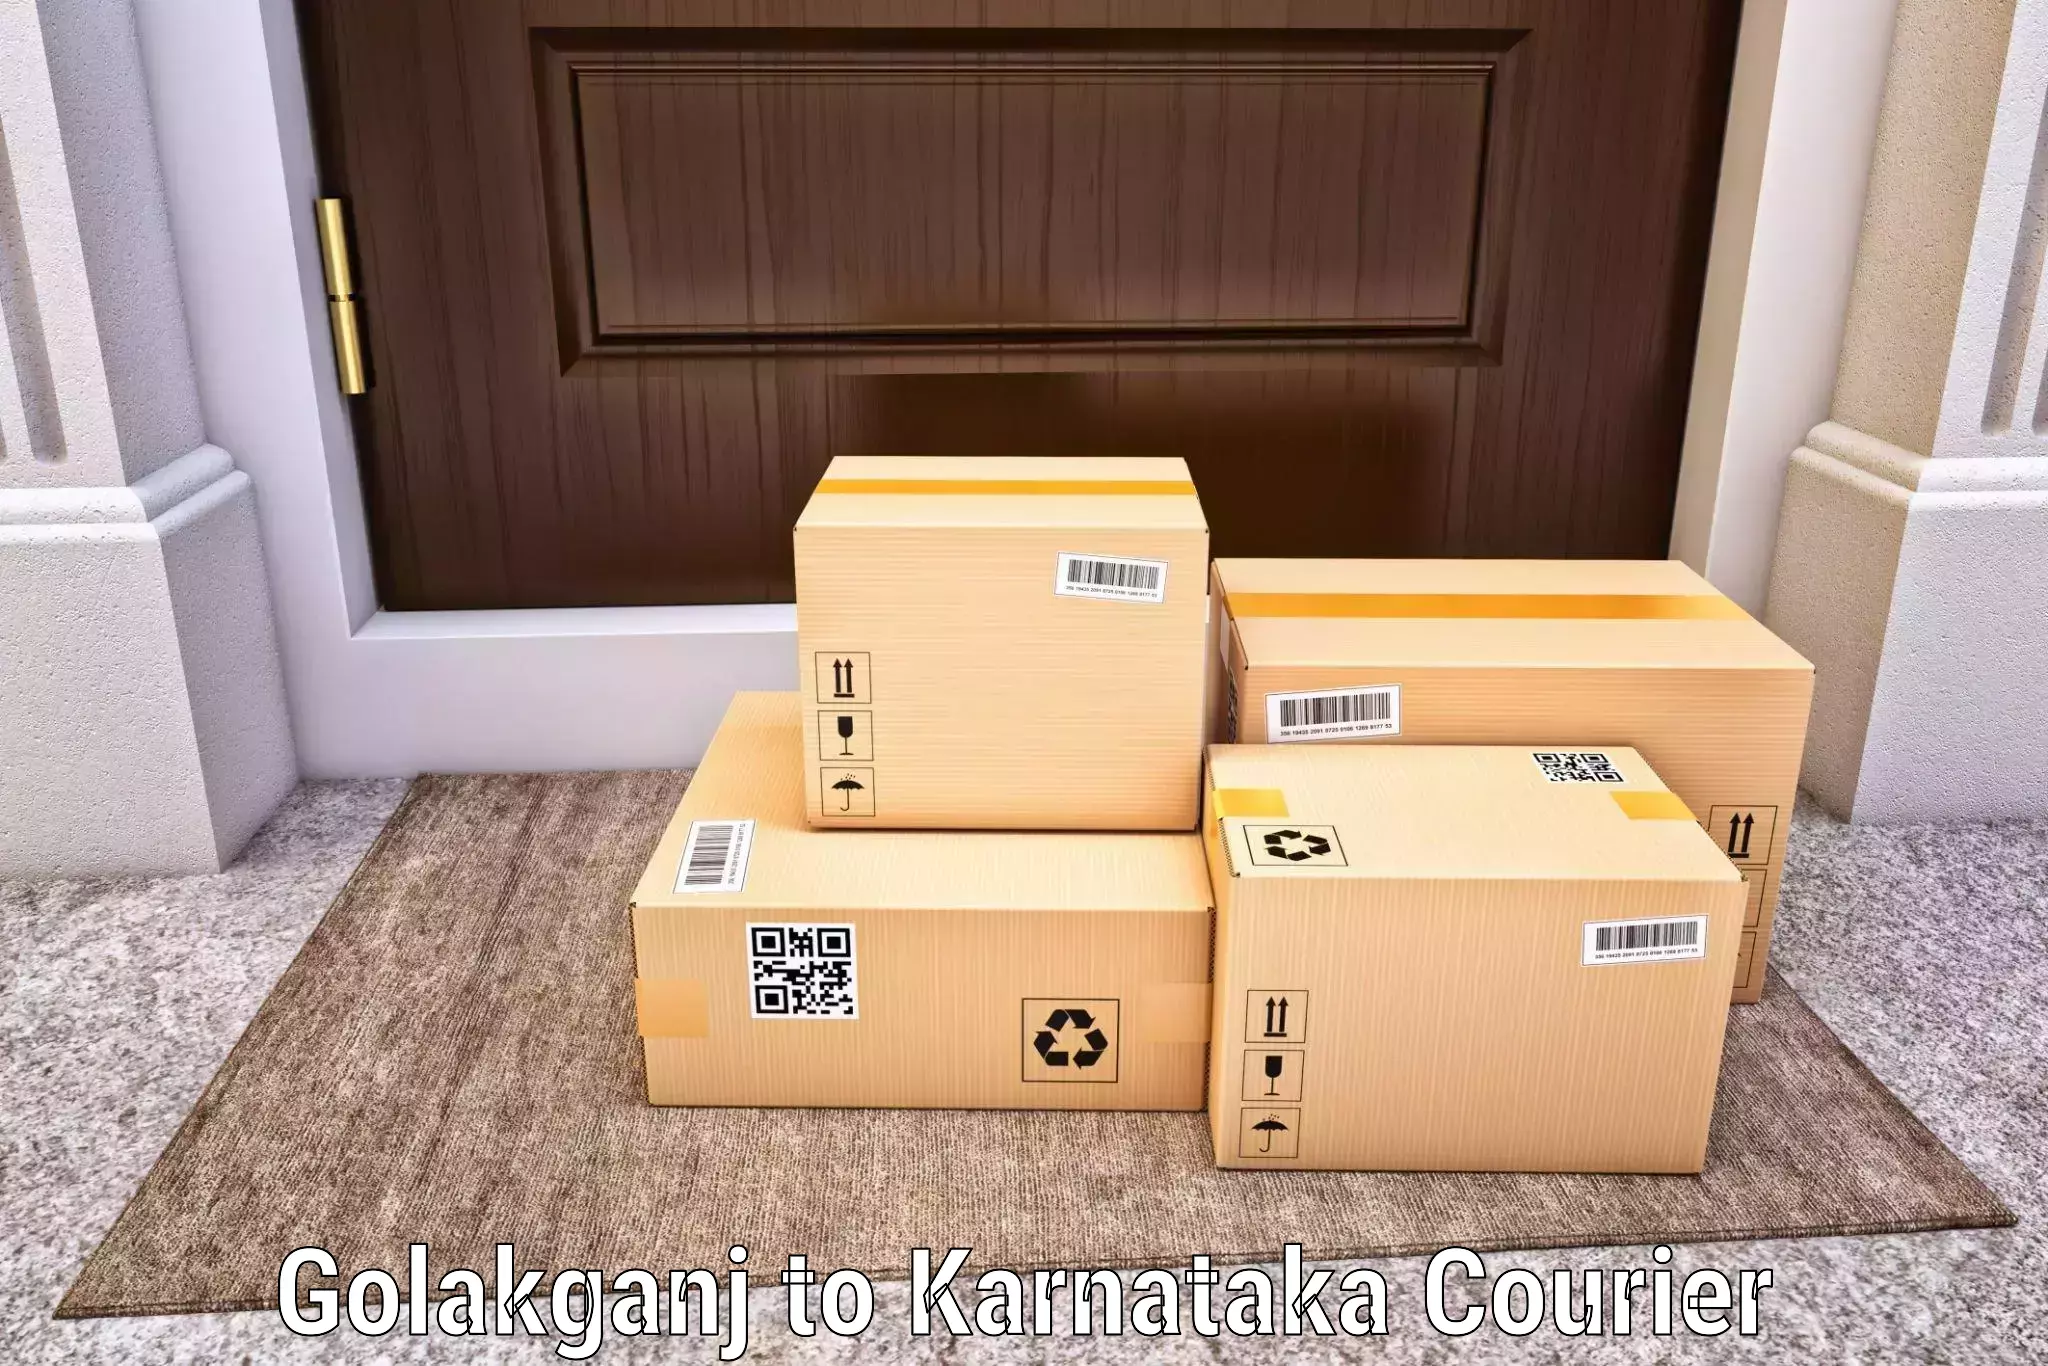 Logistics efficiency in Golakganj to Yellapur